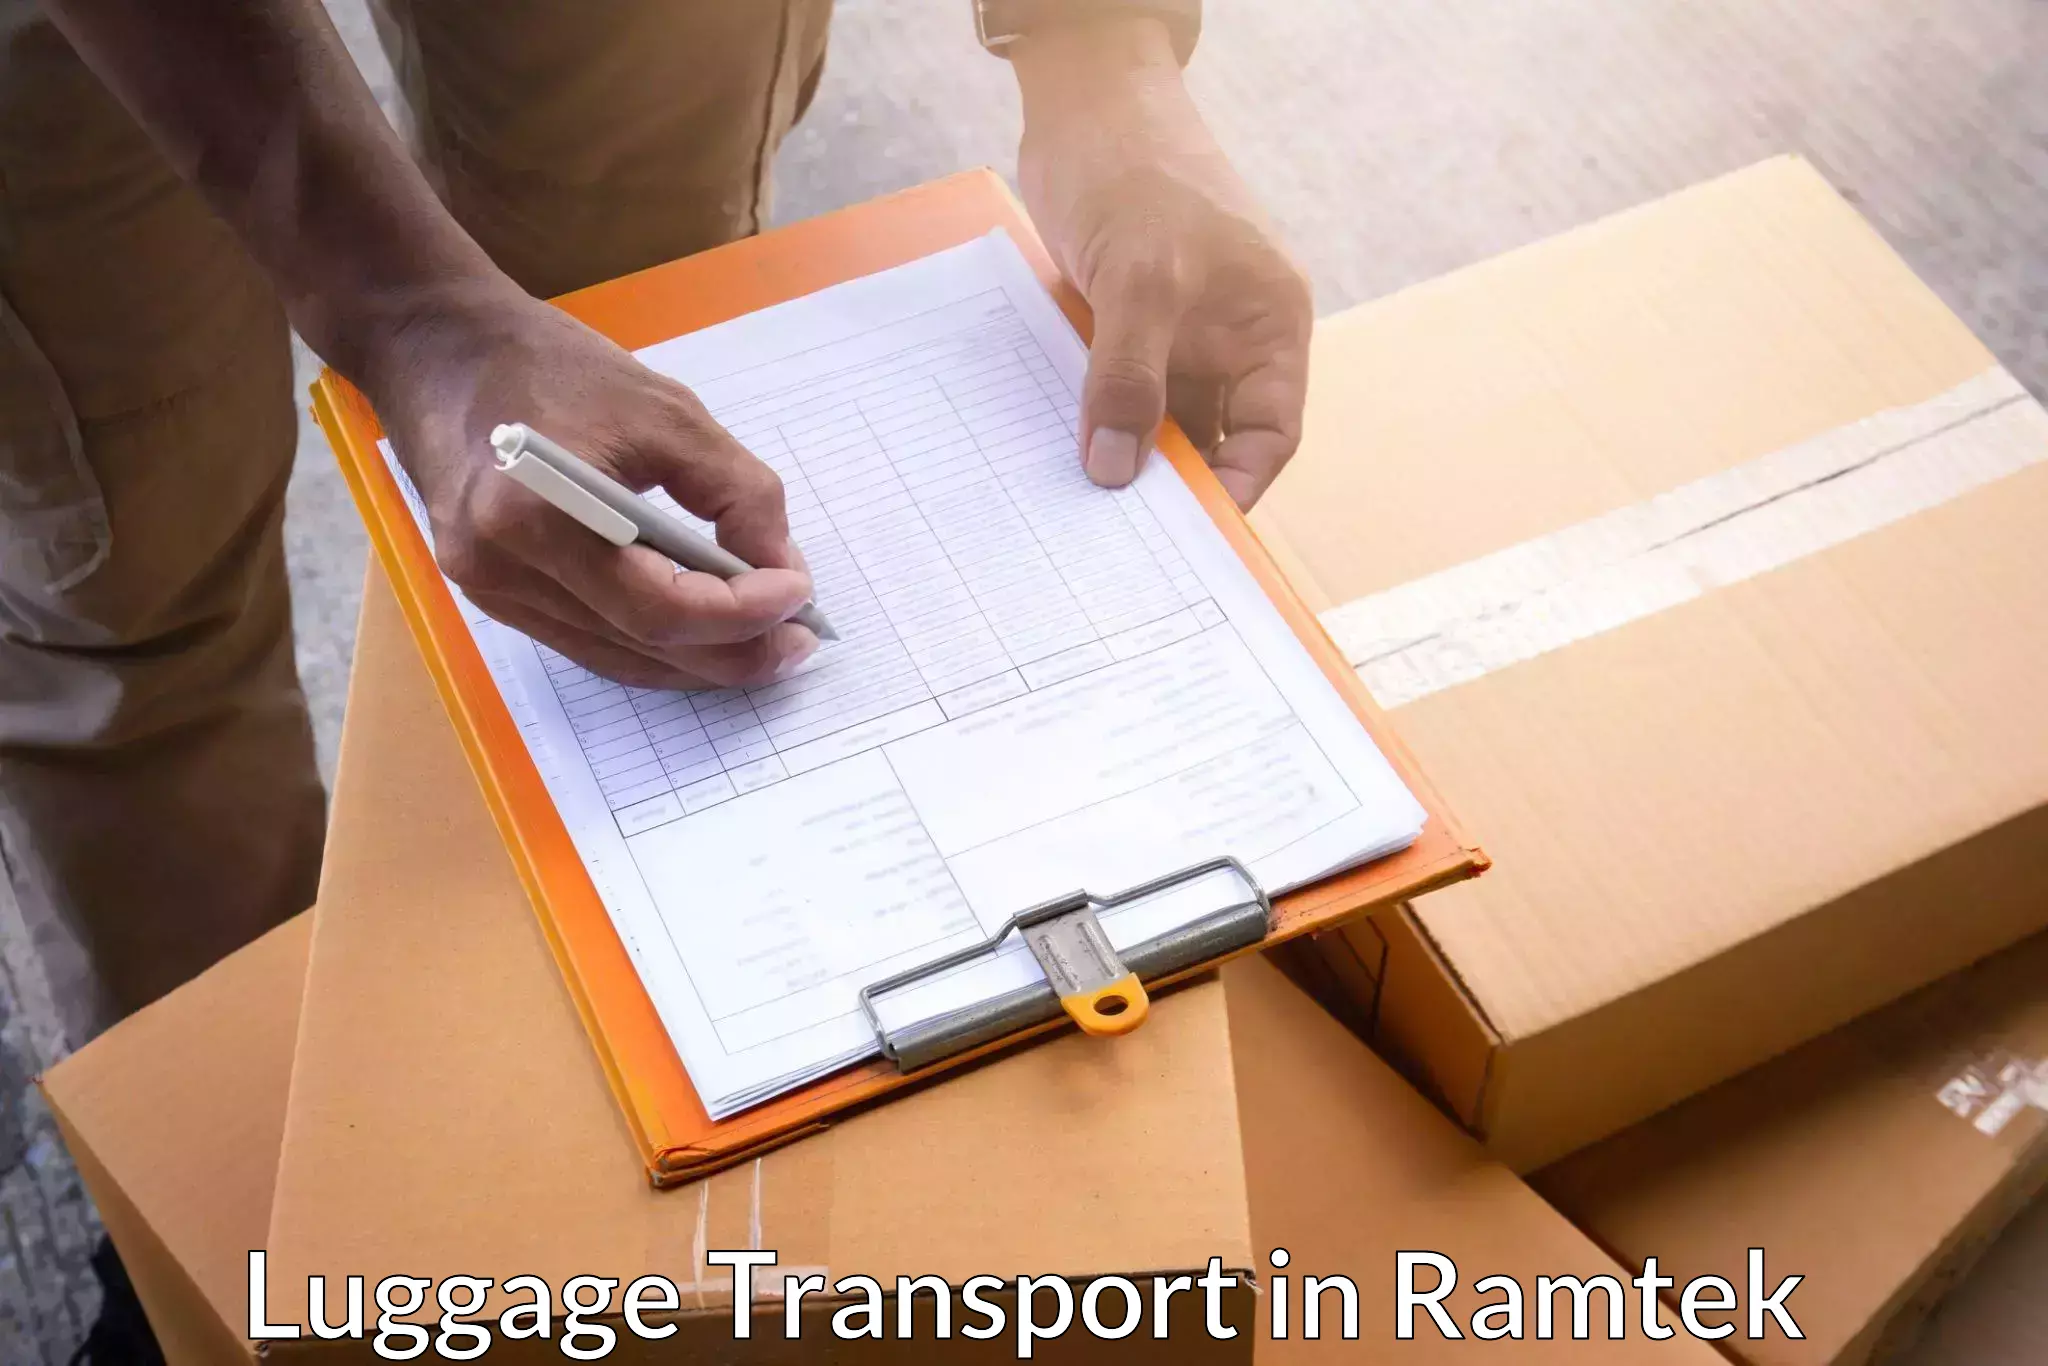 Baggage relocation service in Ramtek